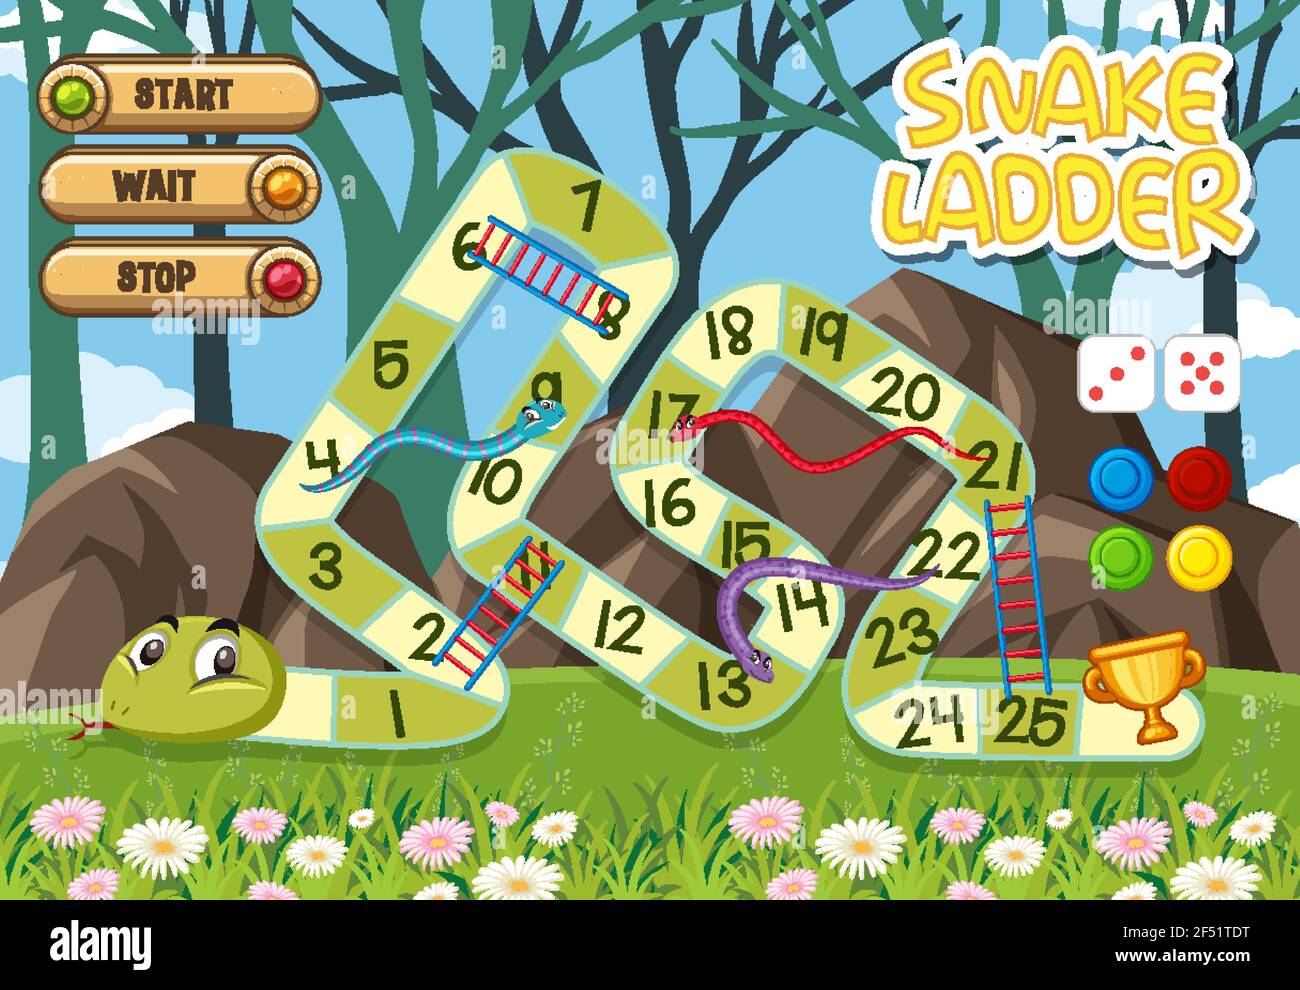 Snake Ladder Board Game for kids template illustration Stock Vector Image &  Art - Alamy